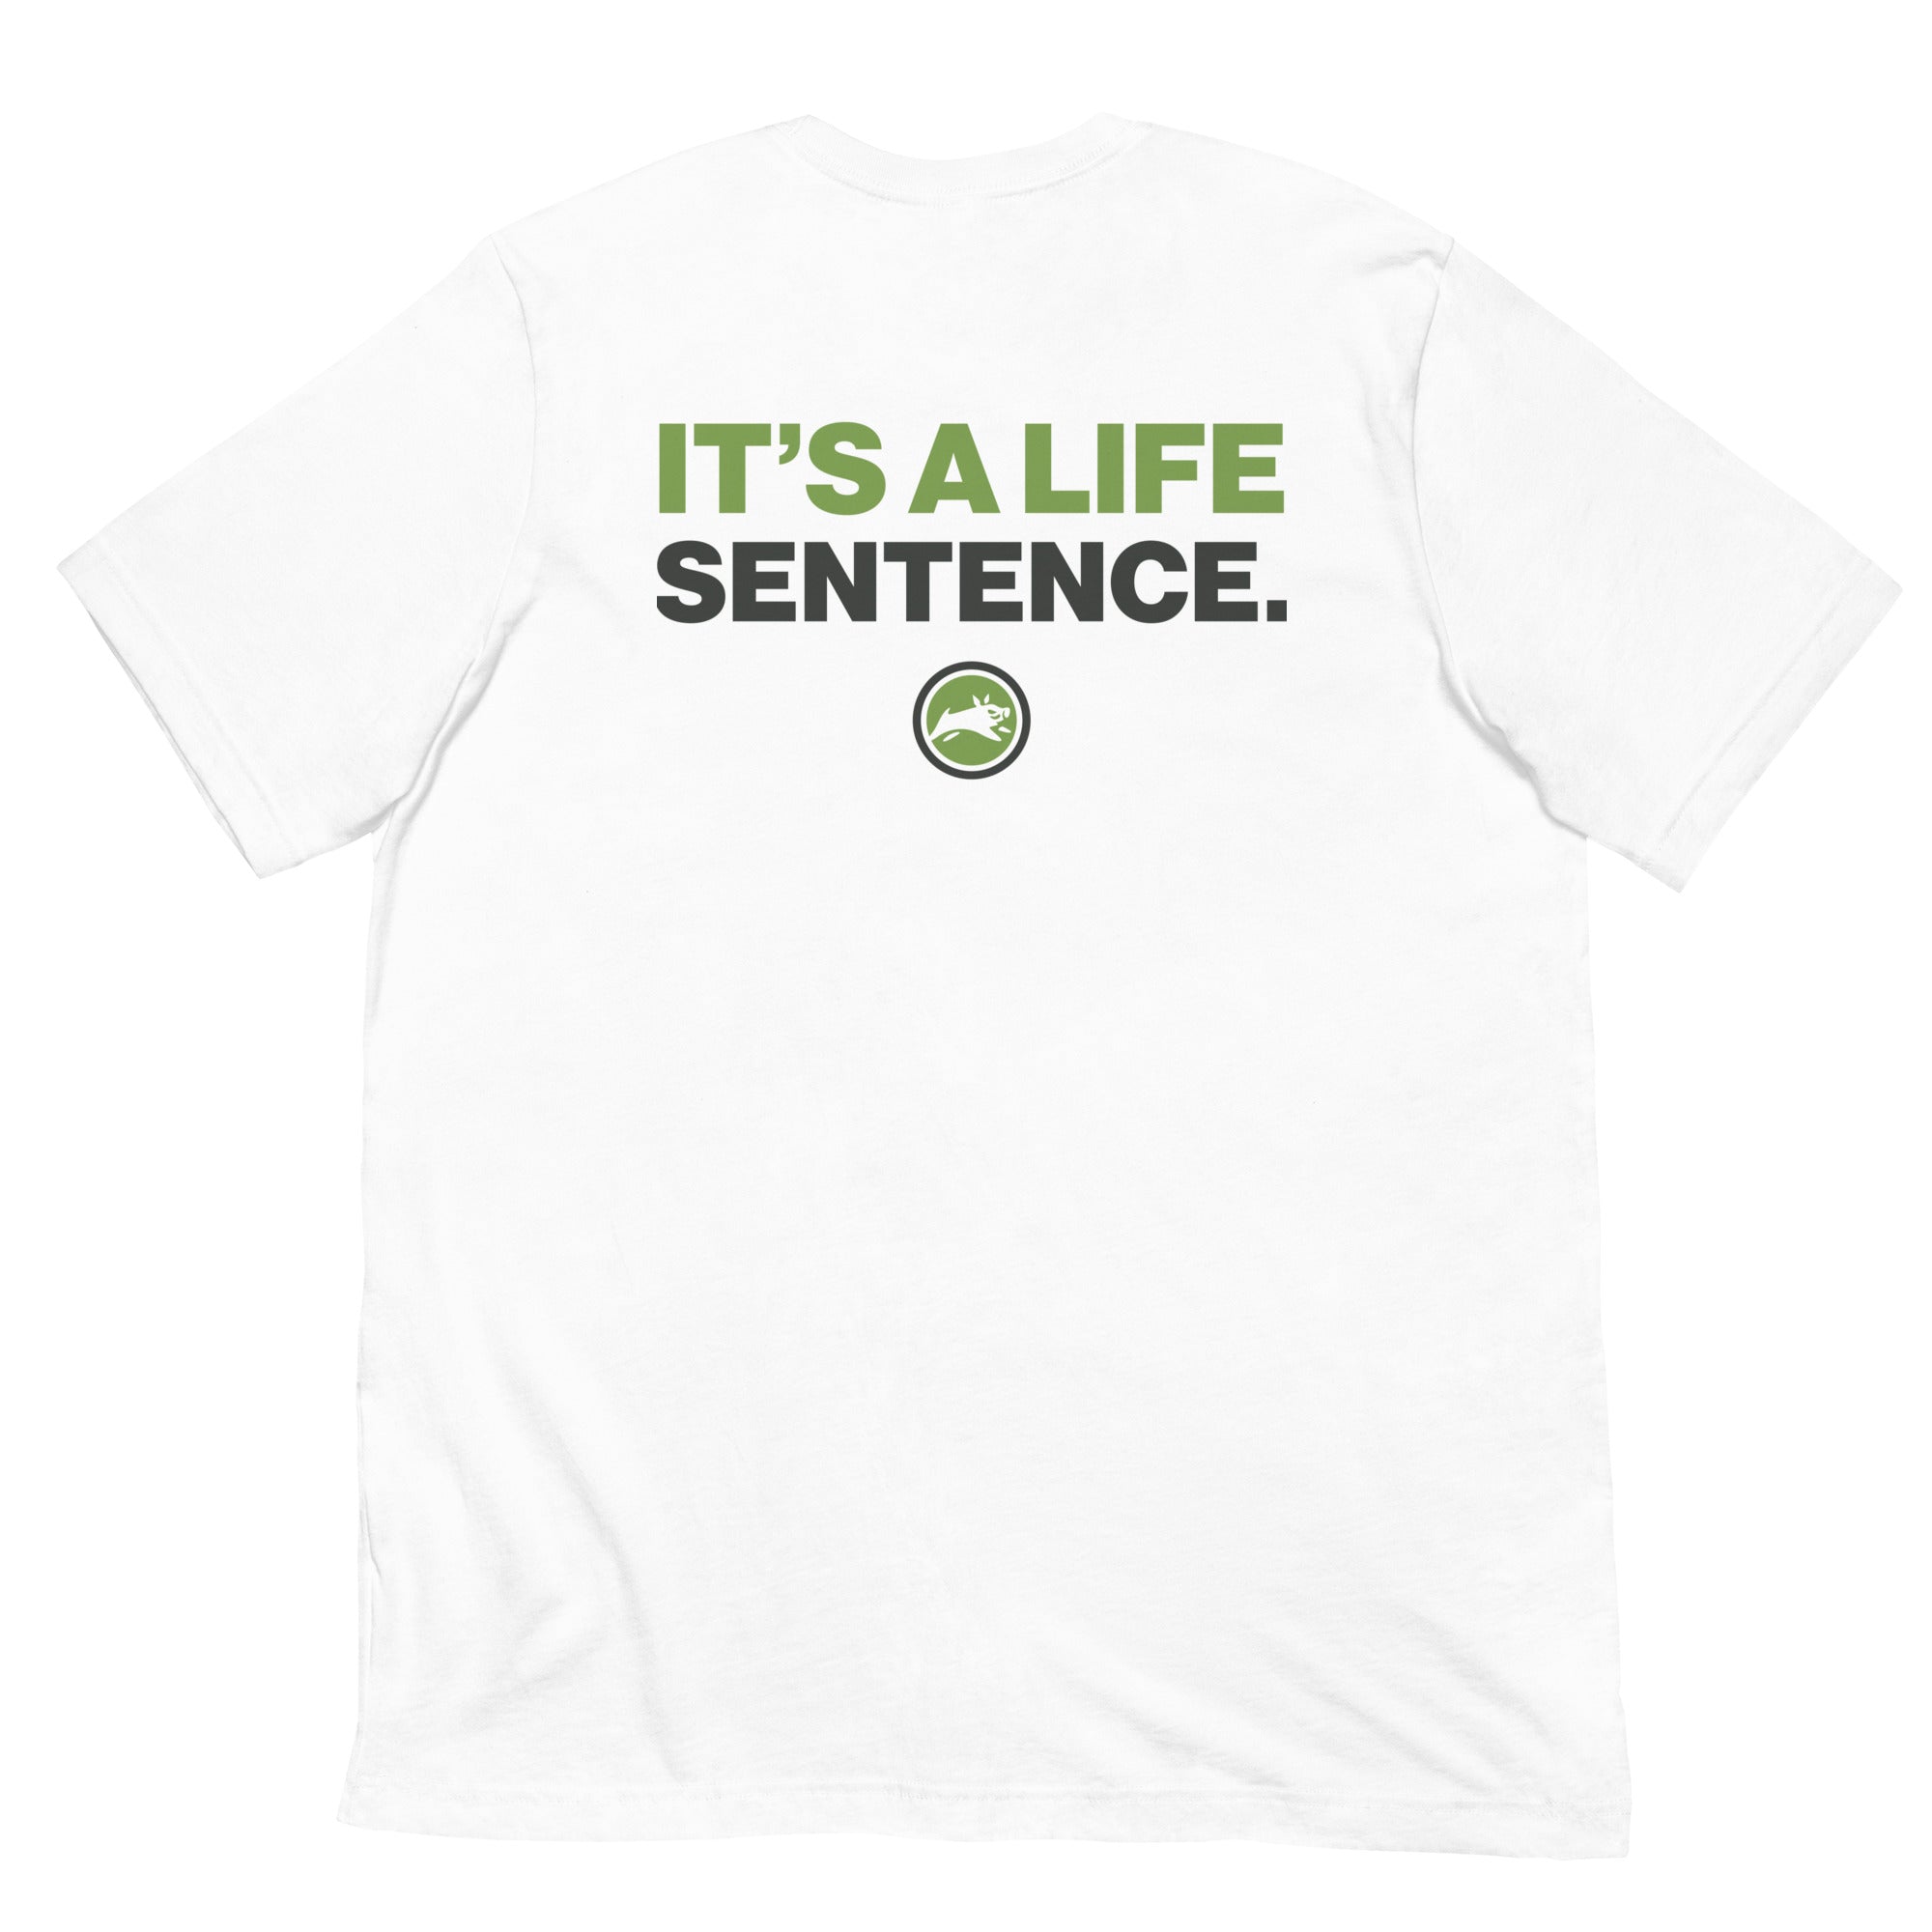 It's A Life Sentence. - Short-Sleeve Unisex T-Shirt